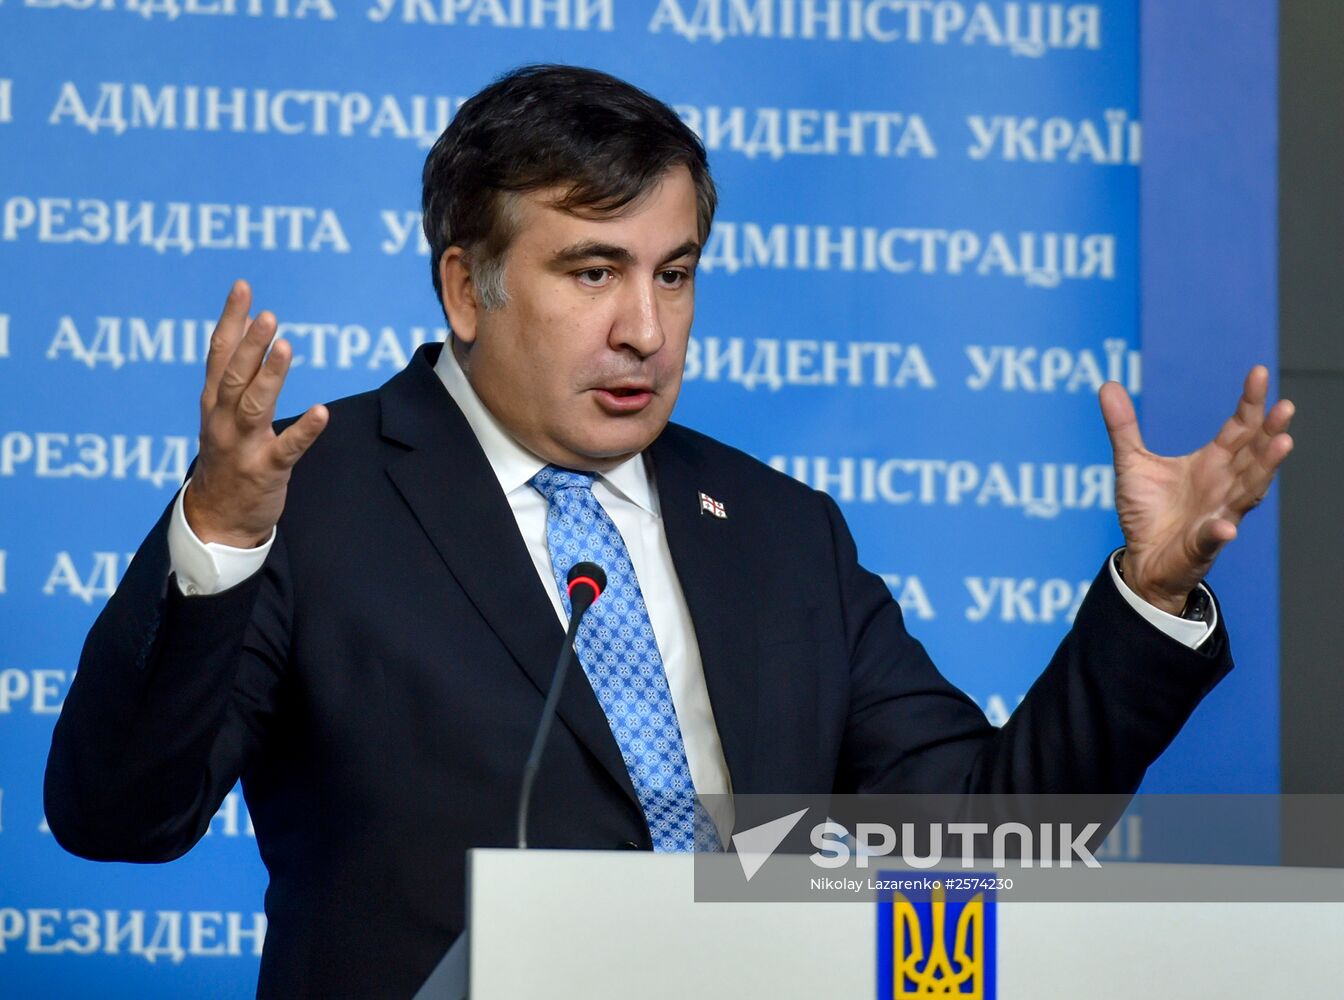 Georgian former President and the Ukrainian President's Aide Mikheil Saakashvili